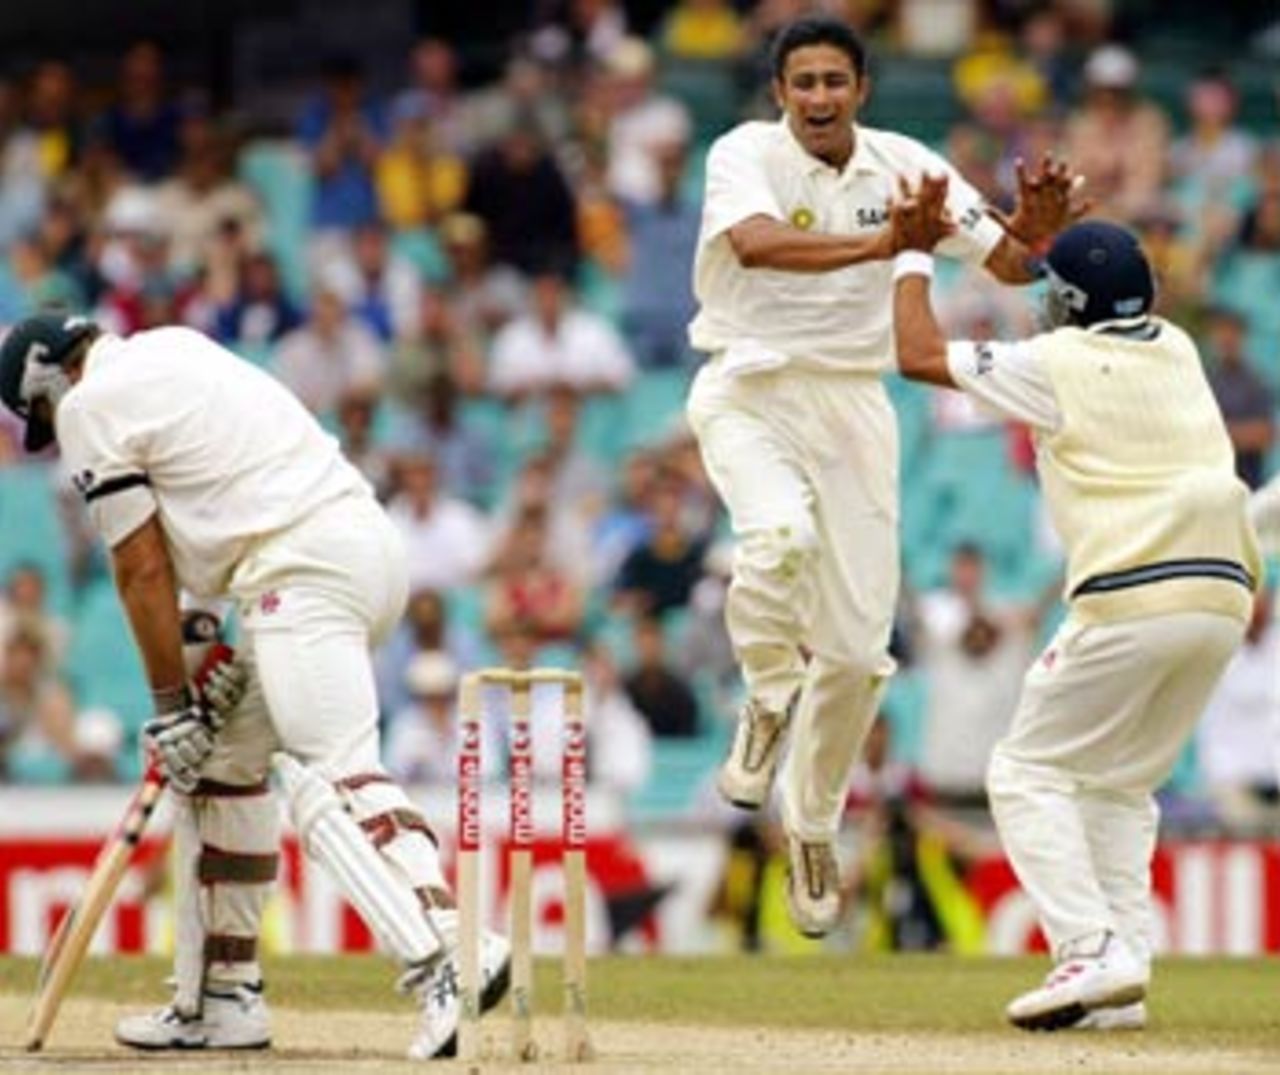 Anil Kumble struck for India, sending Matthew Hayden back, Australia v India, 4th Test, Sydney, 5th day, January 6, 2004